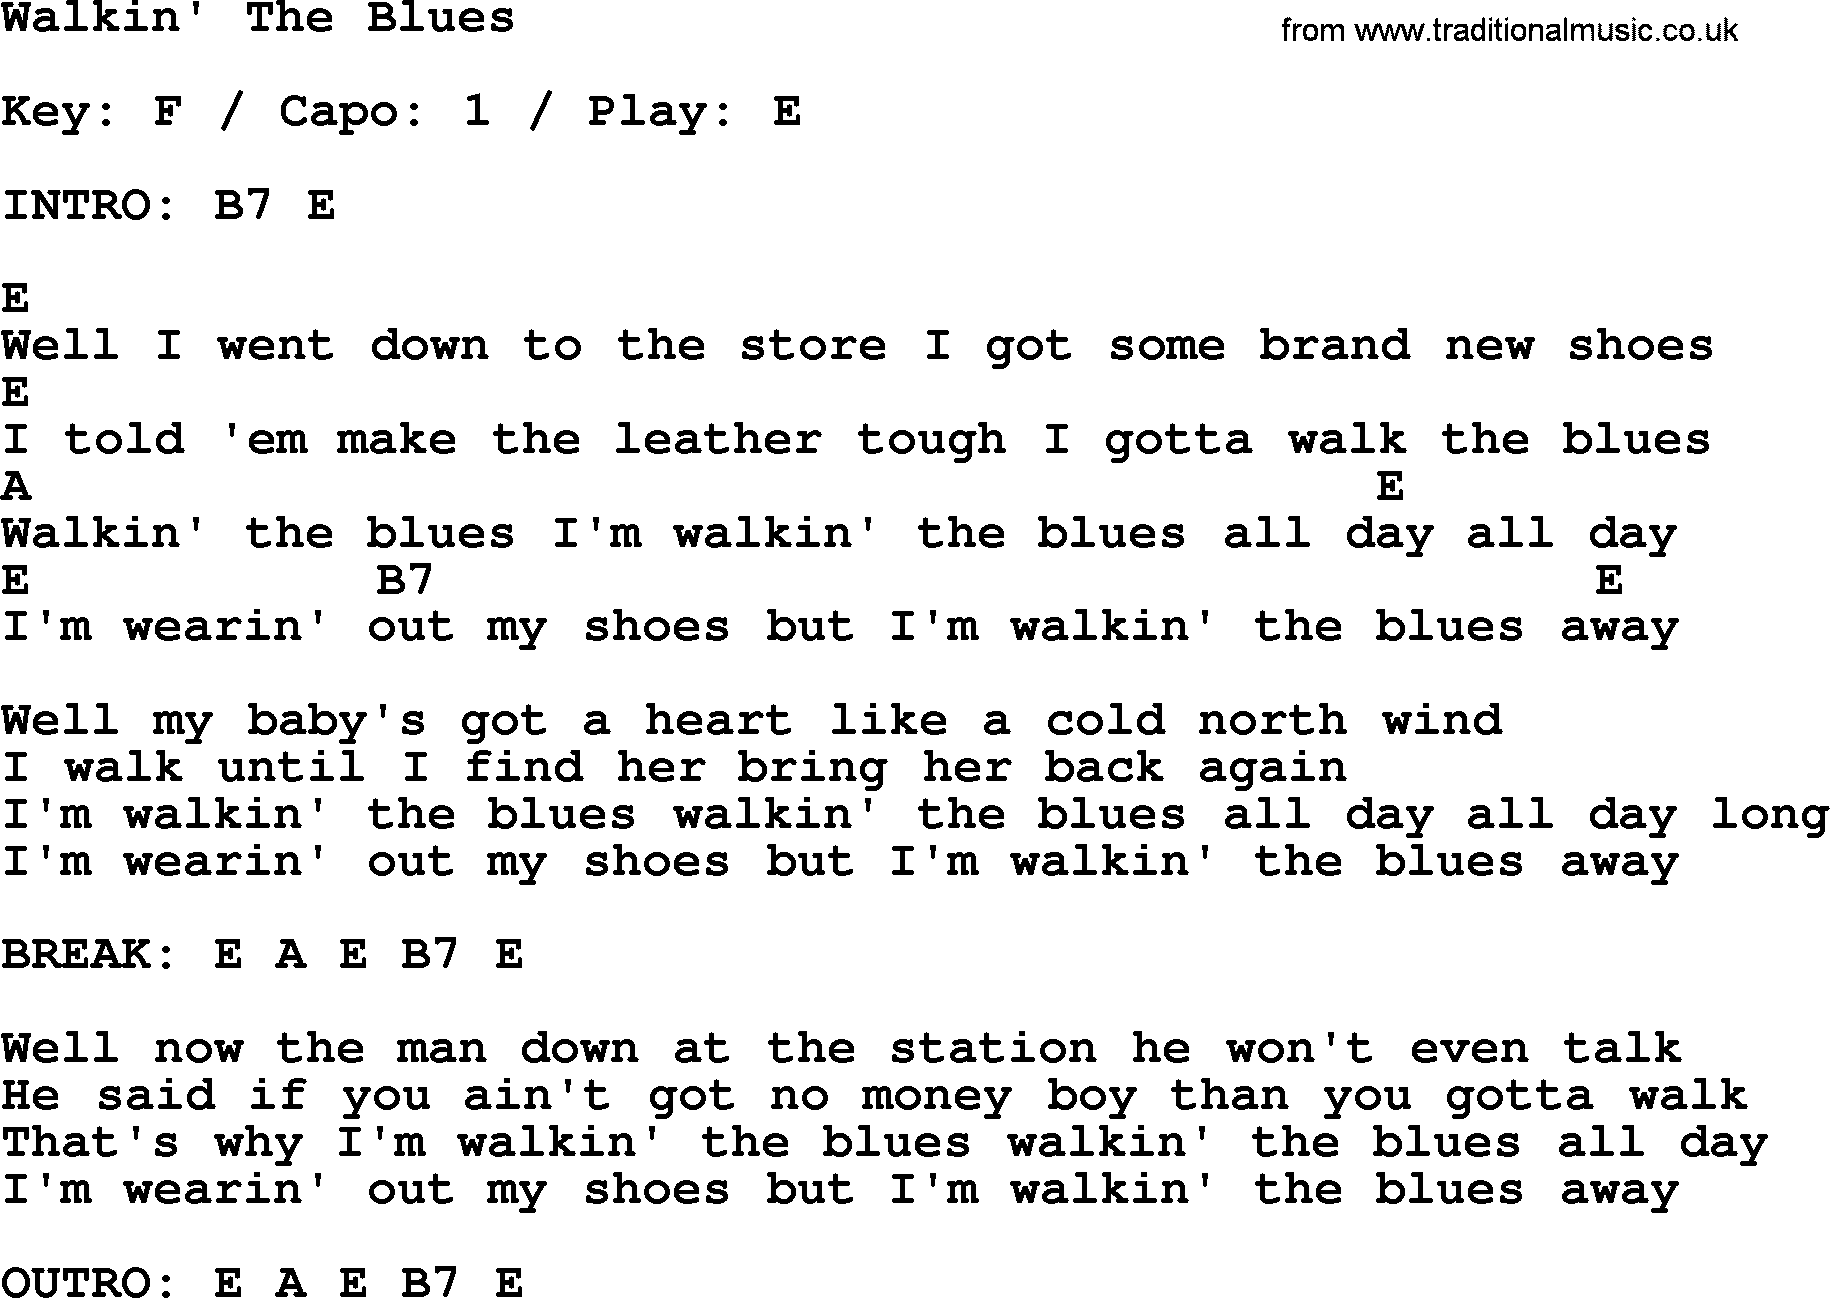 Johnny Cash song Walkin' The Blues, lyrics and chords